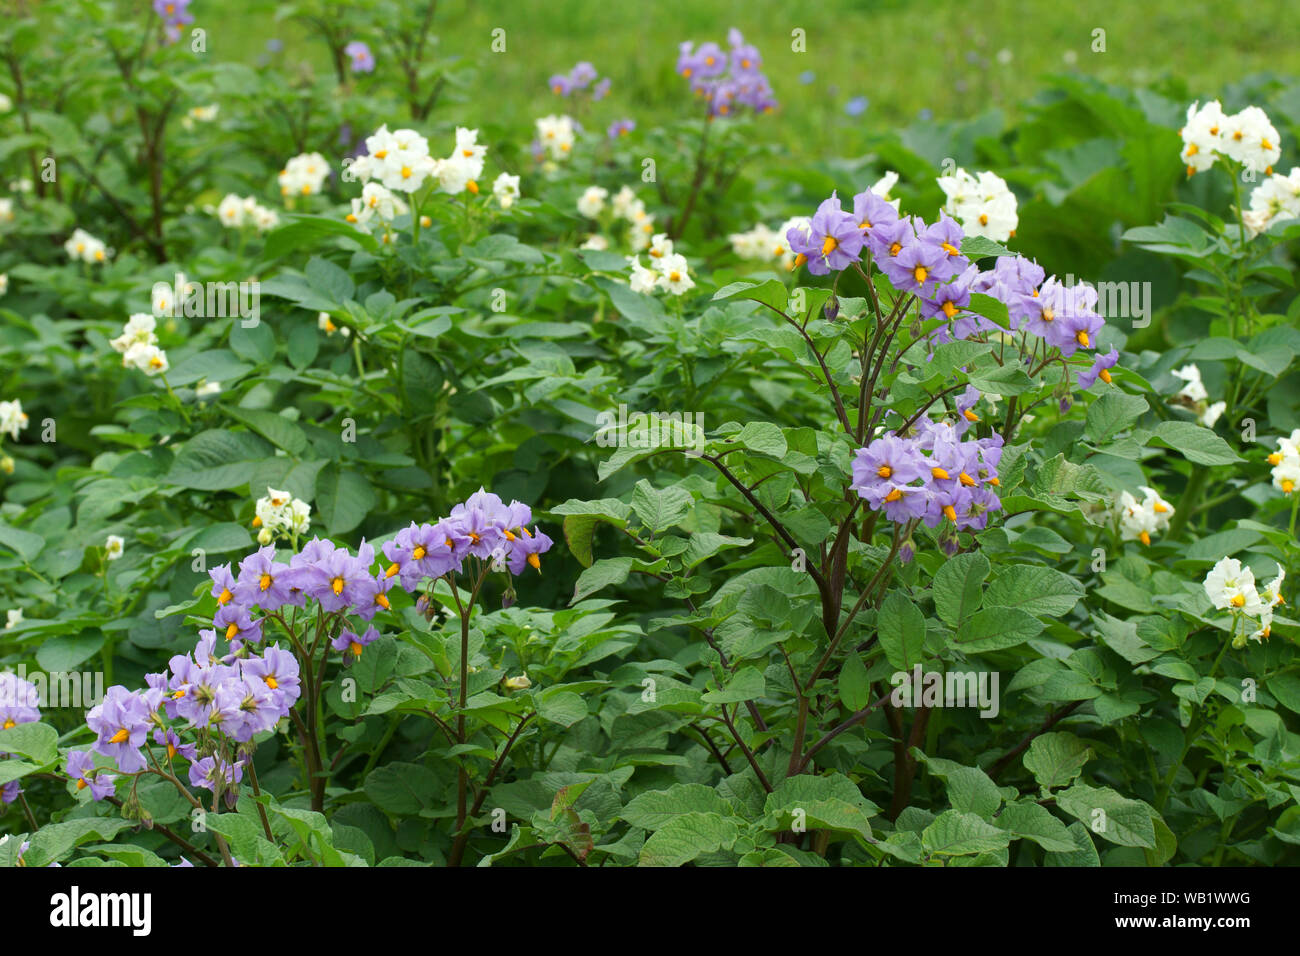 Flowers of a potato plant. Stock Photo